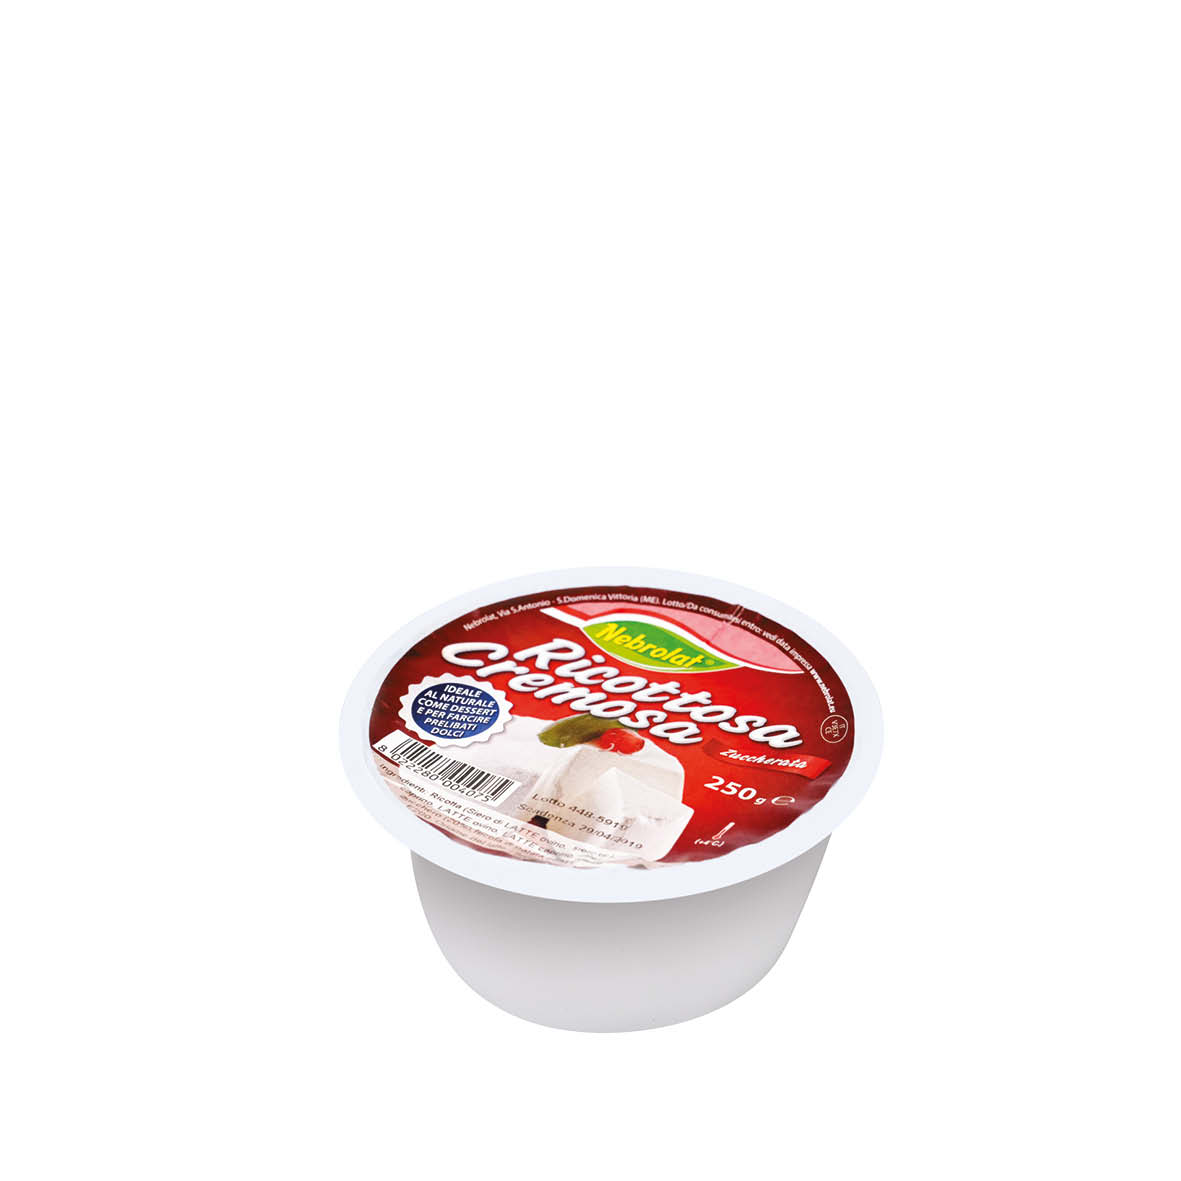 Creamy sweet ricotta gr 250